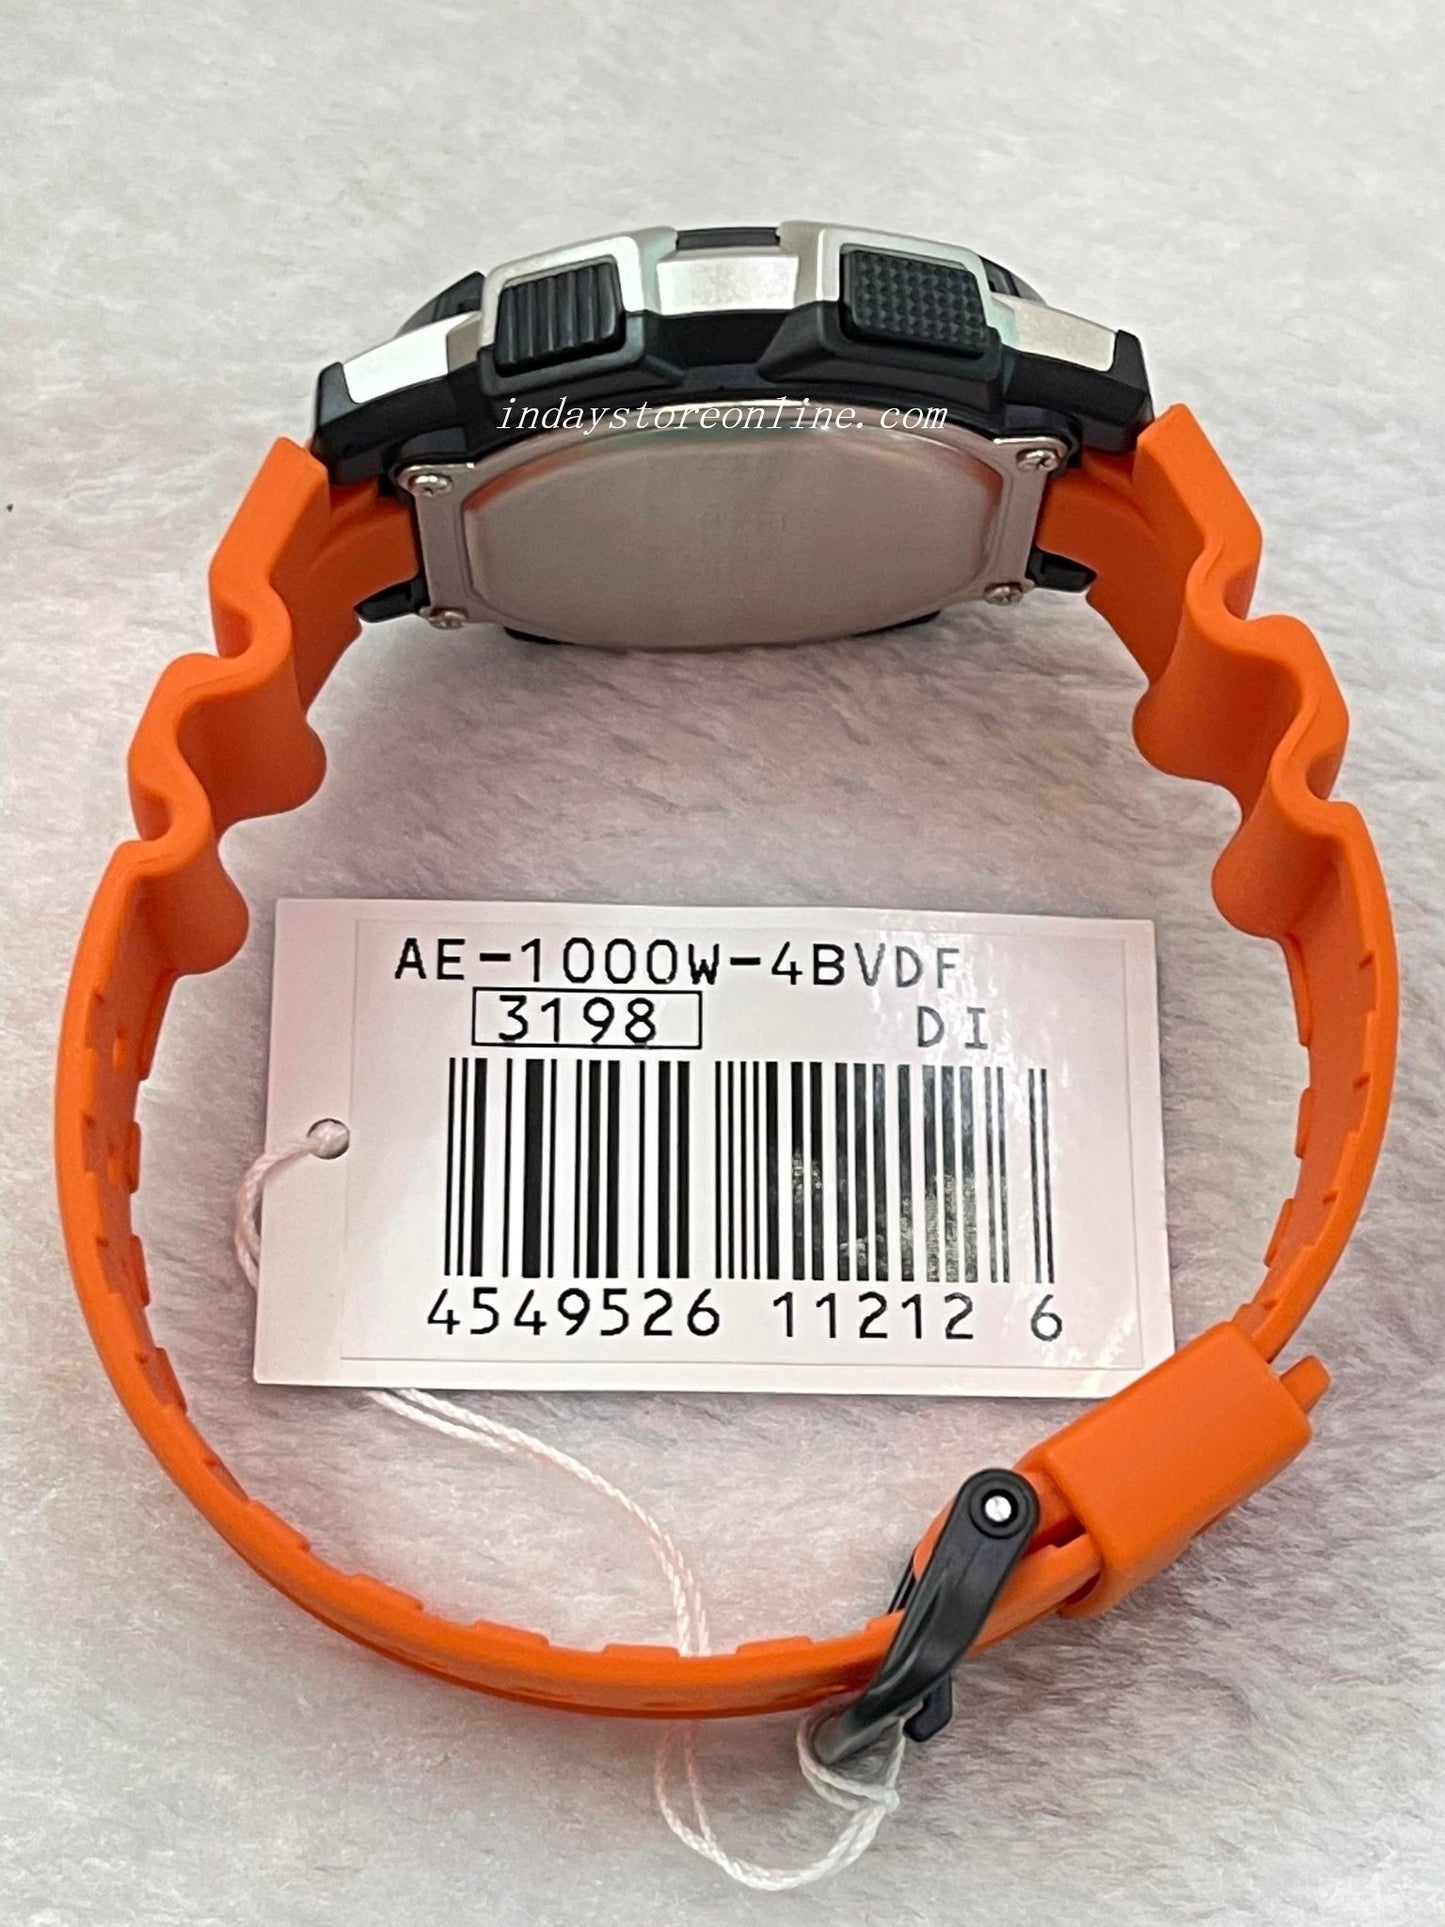 Casio Digital Men's Watch AE-1000W-4B Digital Orange Color Resin Band Resin Glass Battery Life: 10 Years